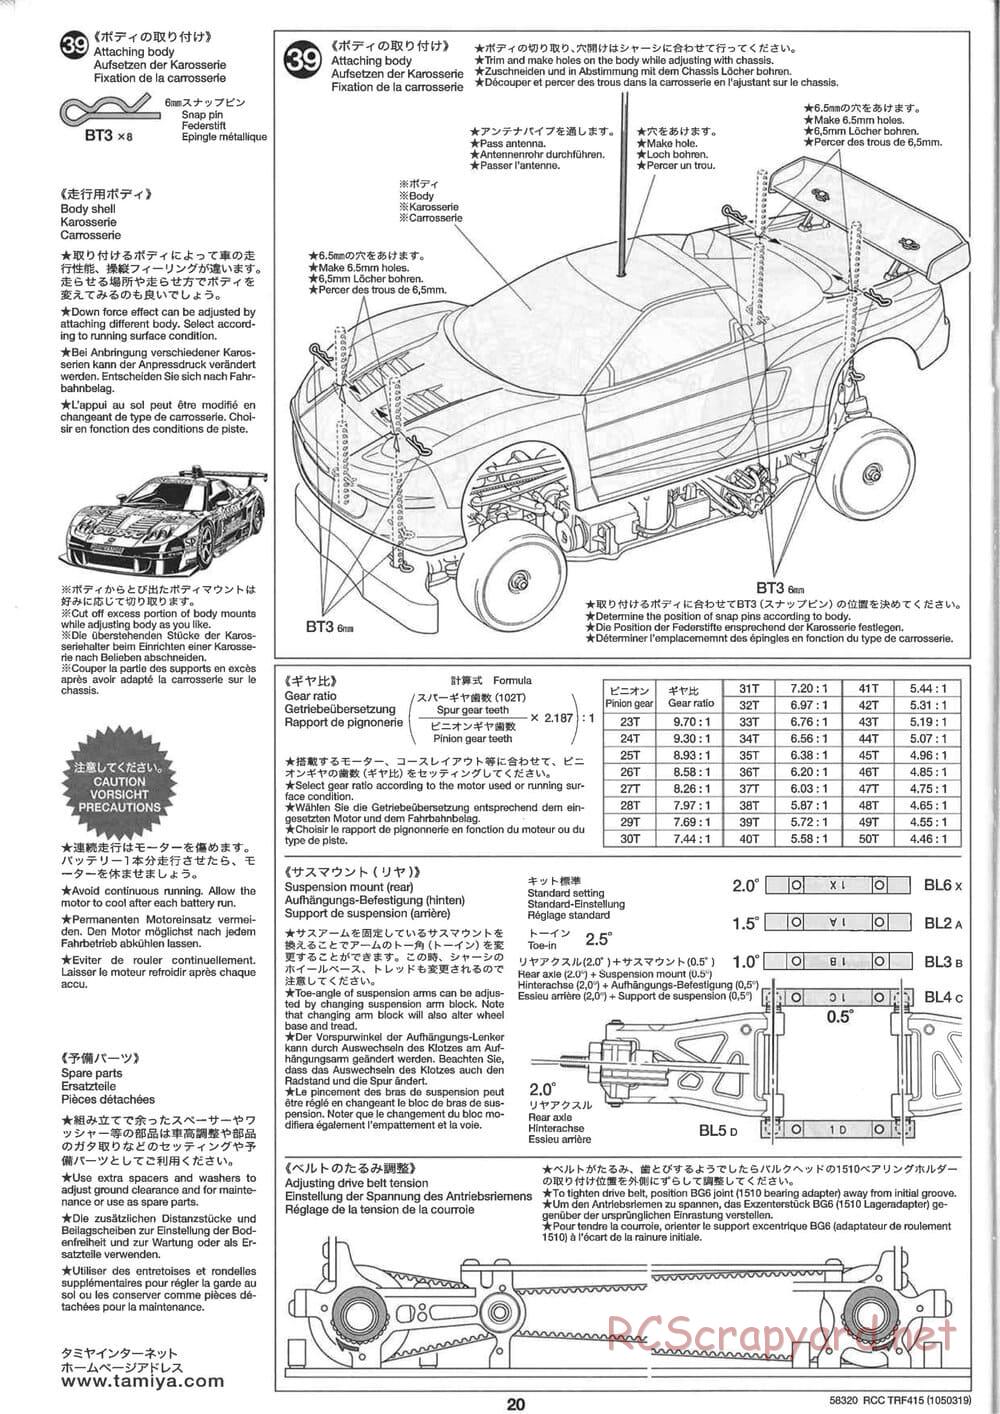 Tamiya - TRF415 Chassis - Manual - Page 20